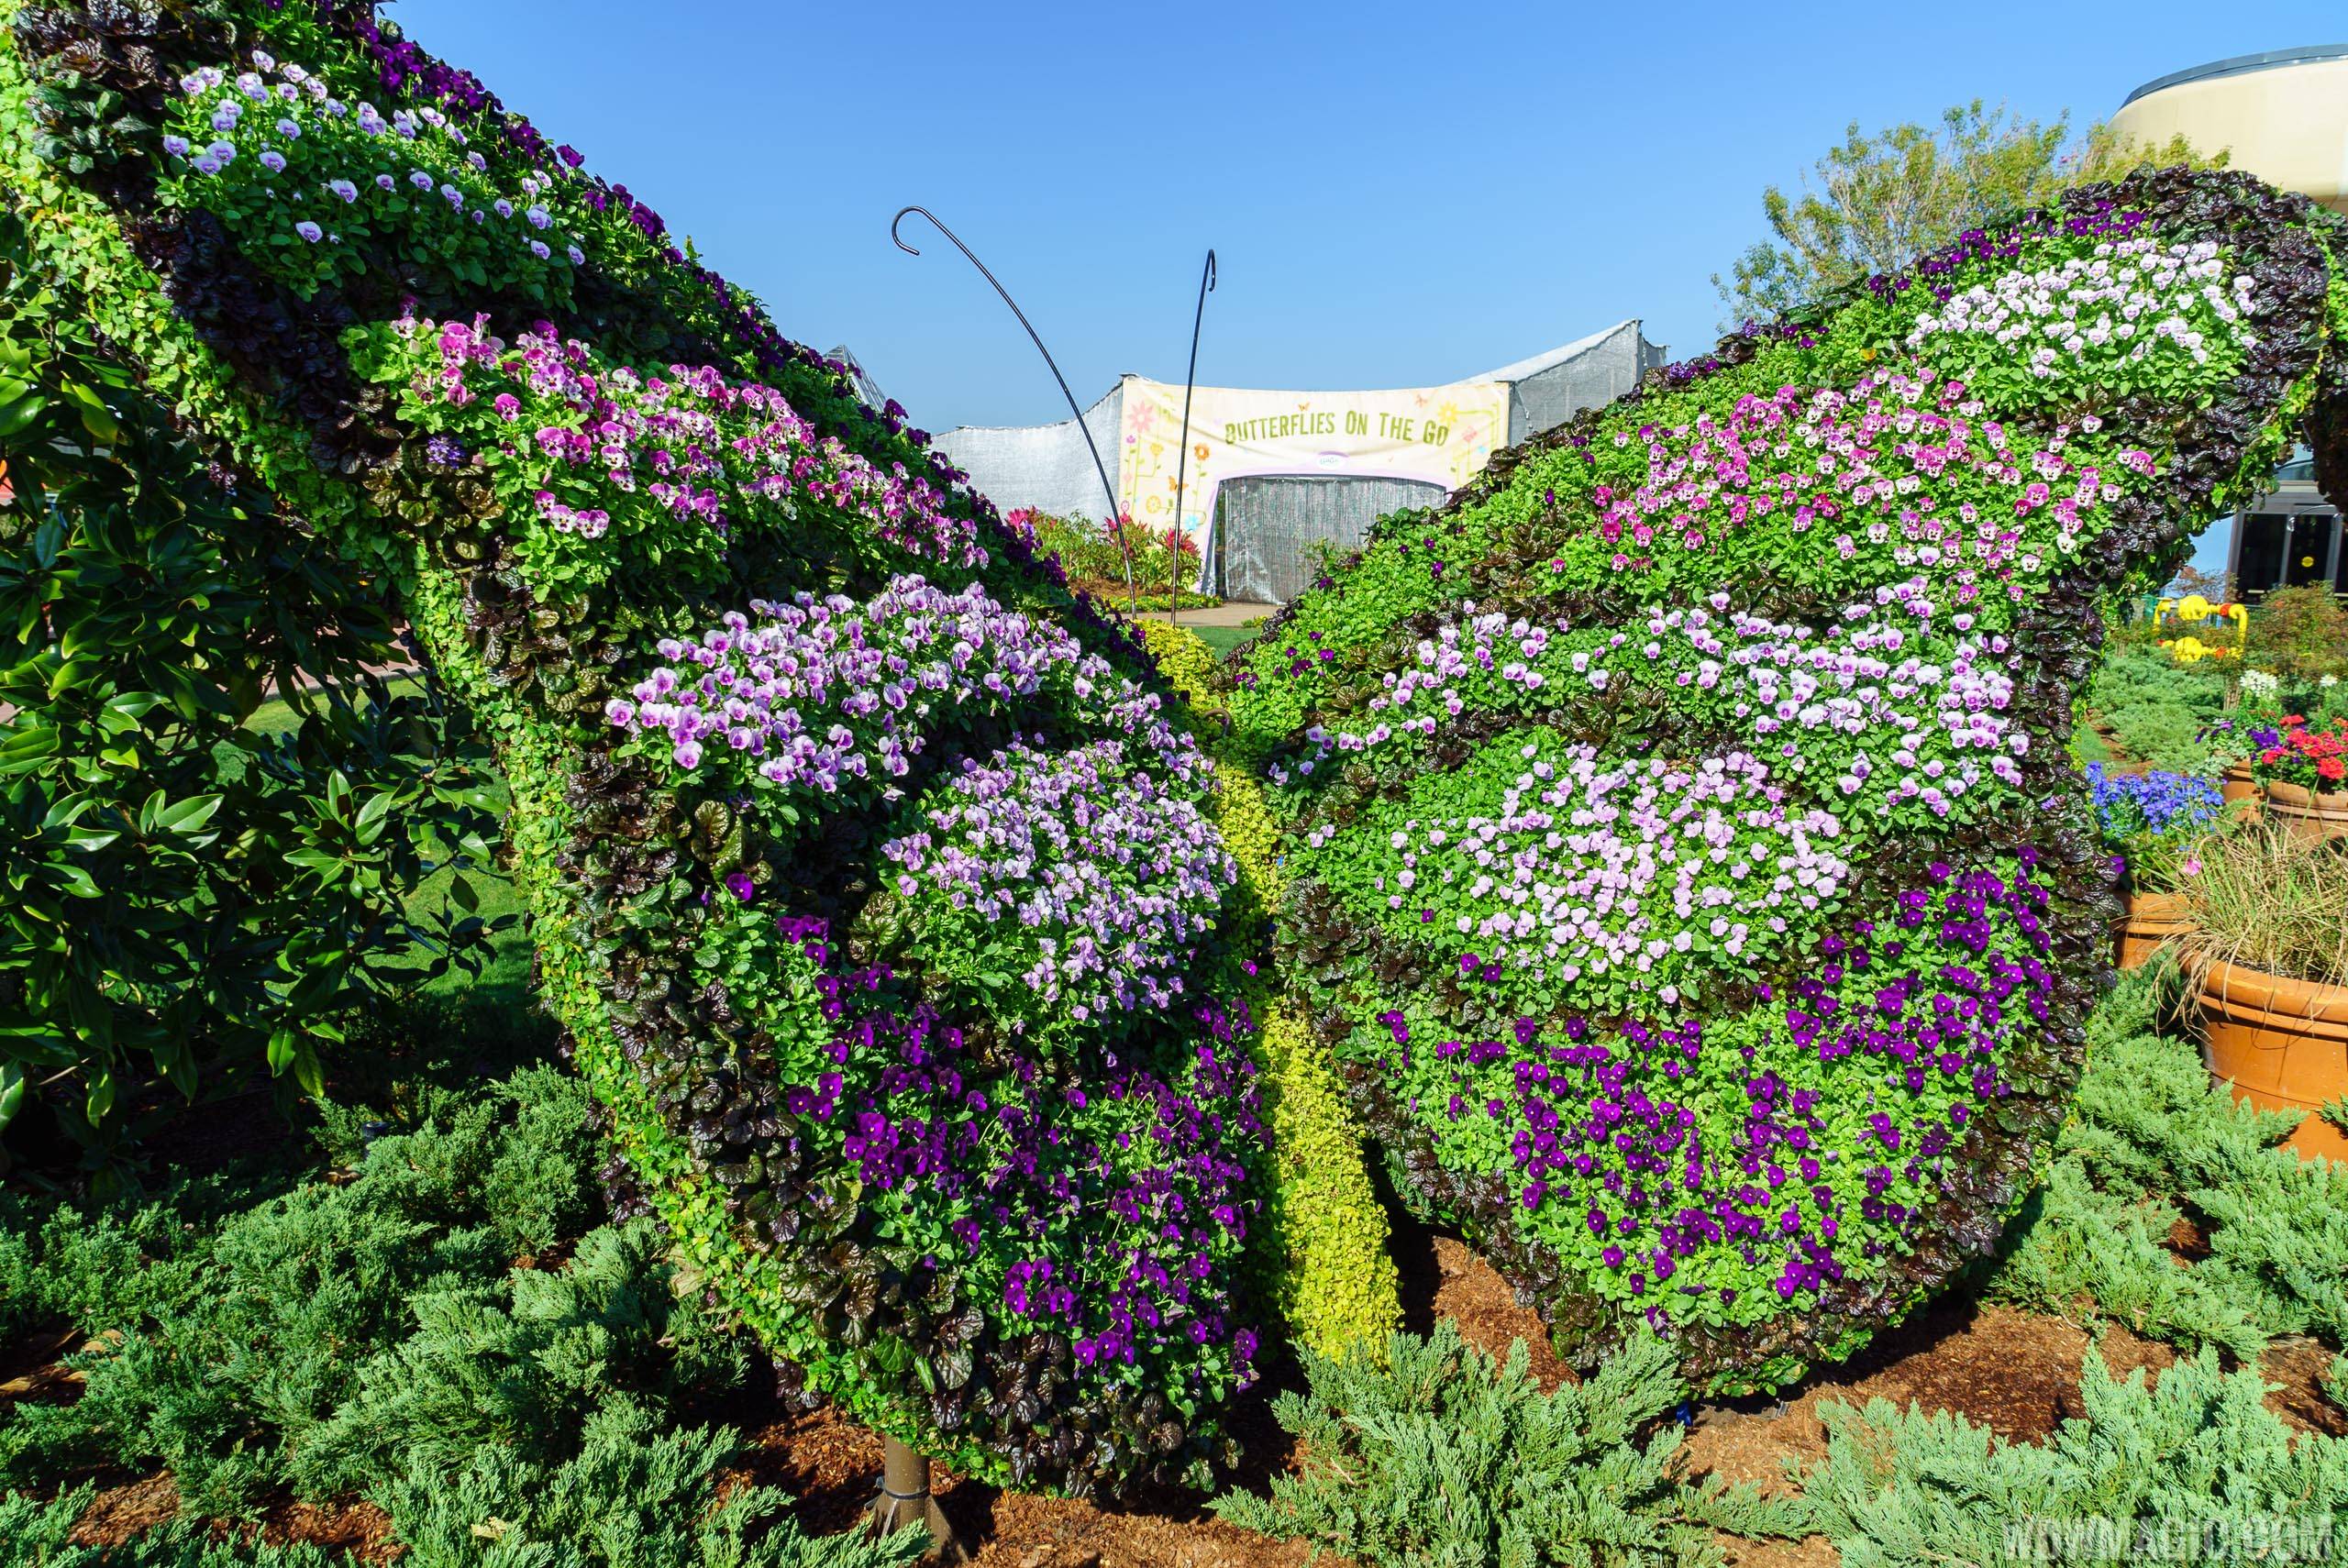 2016 Epcot International Flower and Garden Festival - Butterflies on the Go